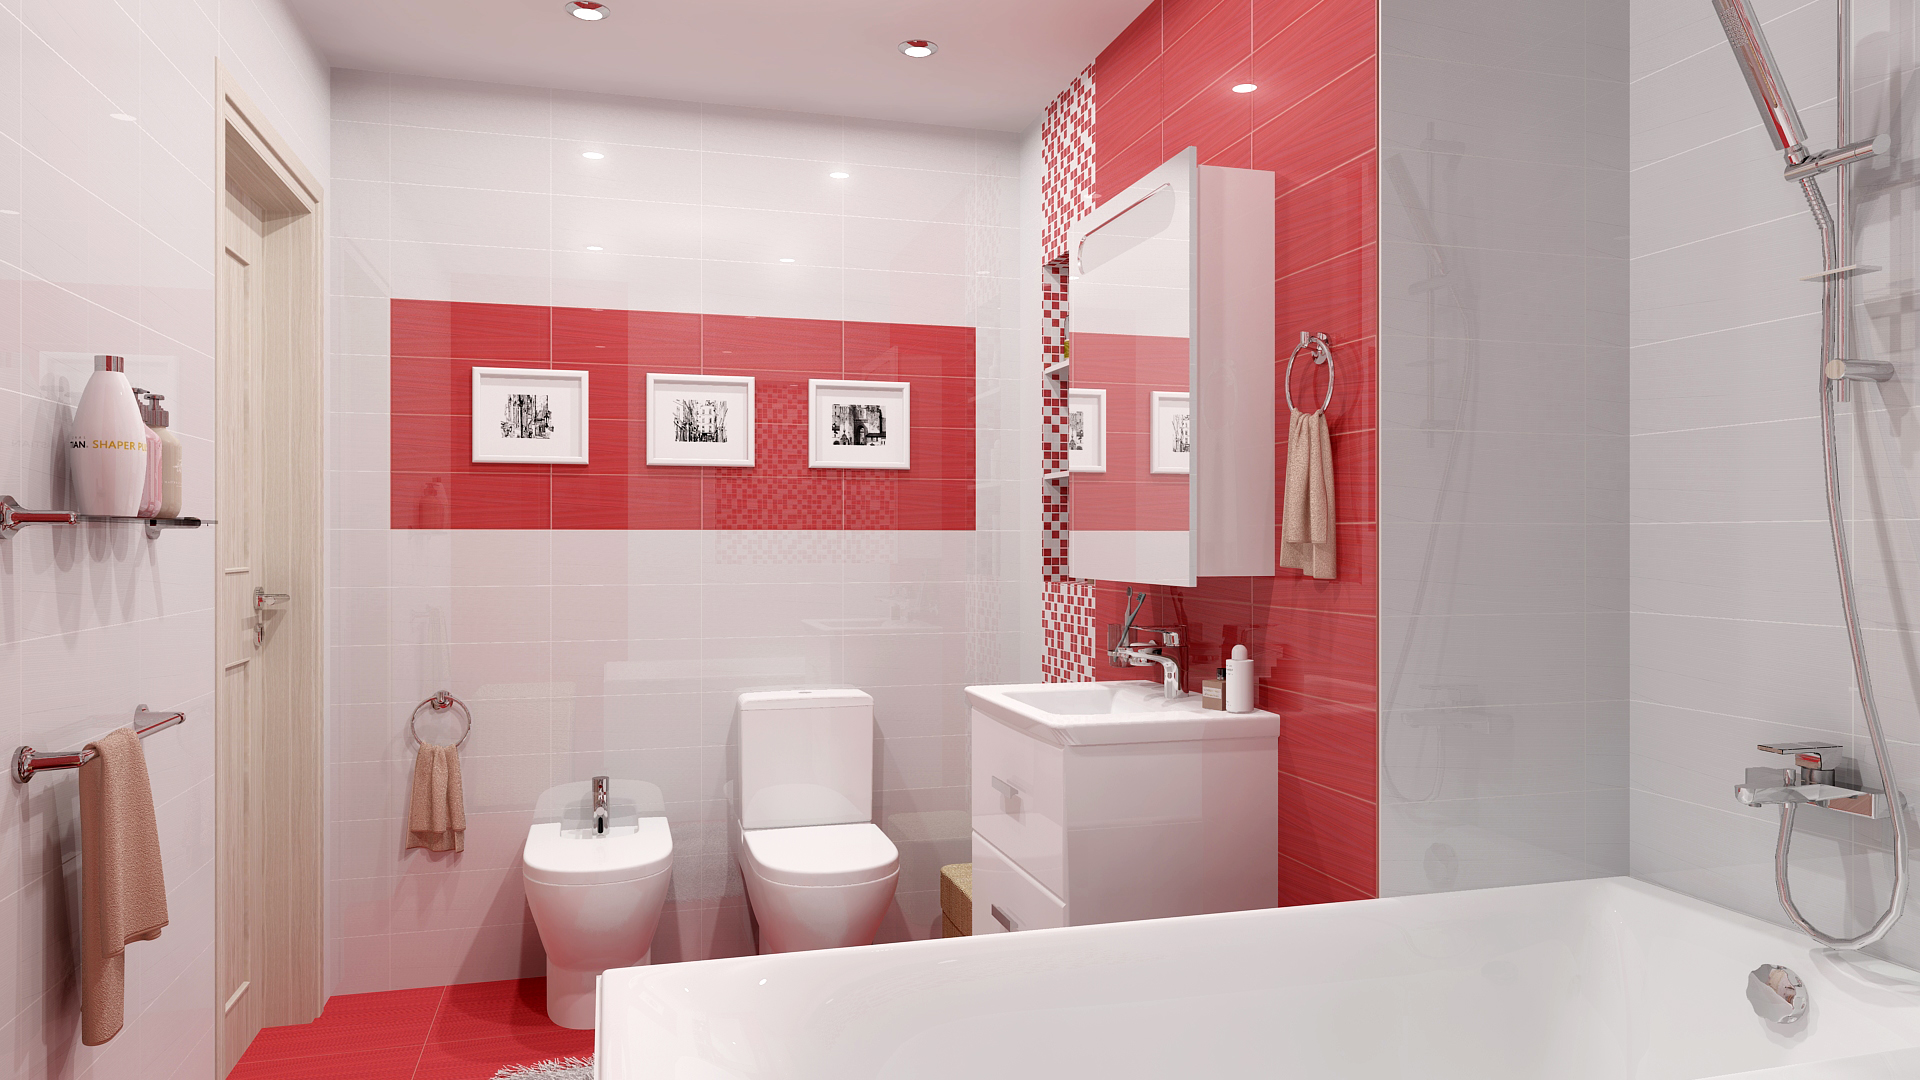 Ванная комната без плитки: дизайн и фото, варианты и материалы отделки